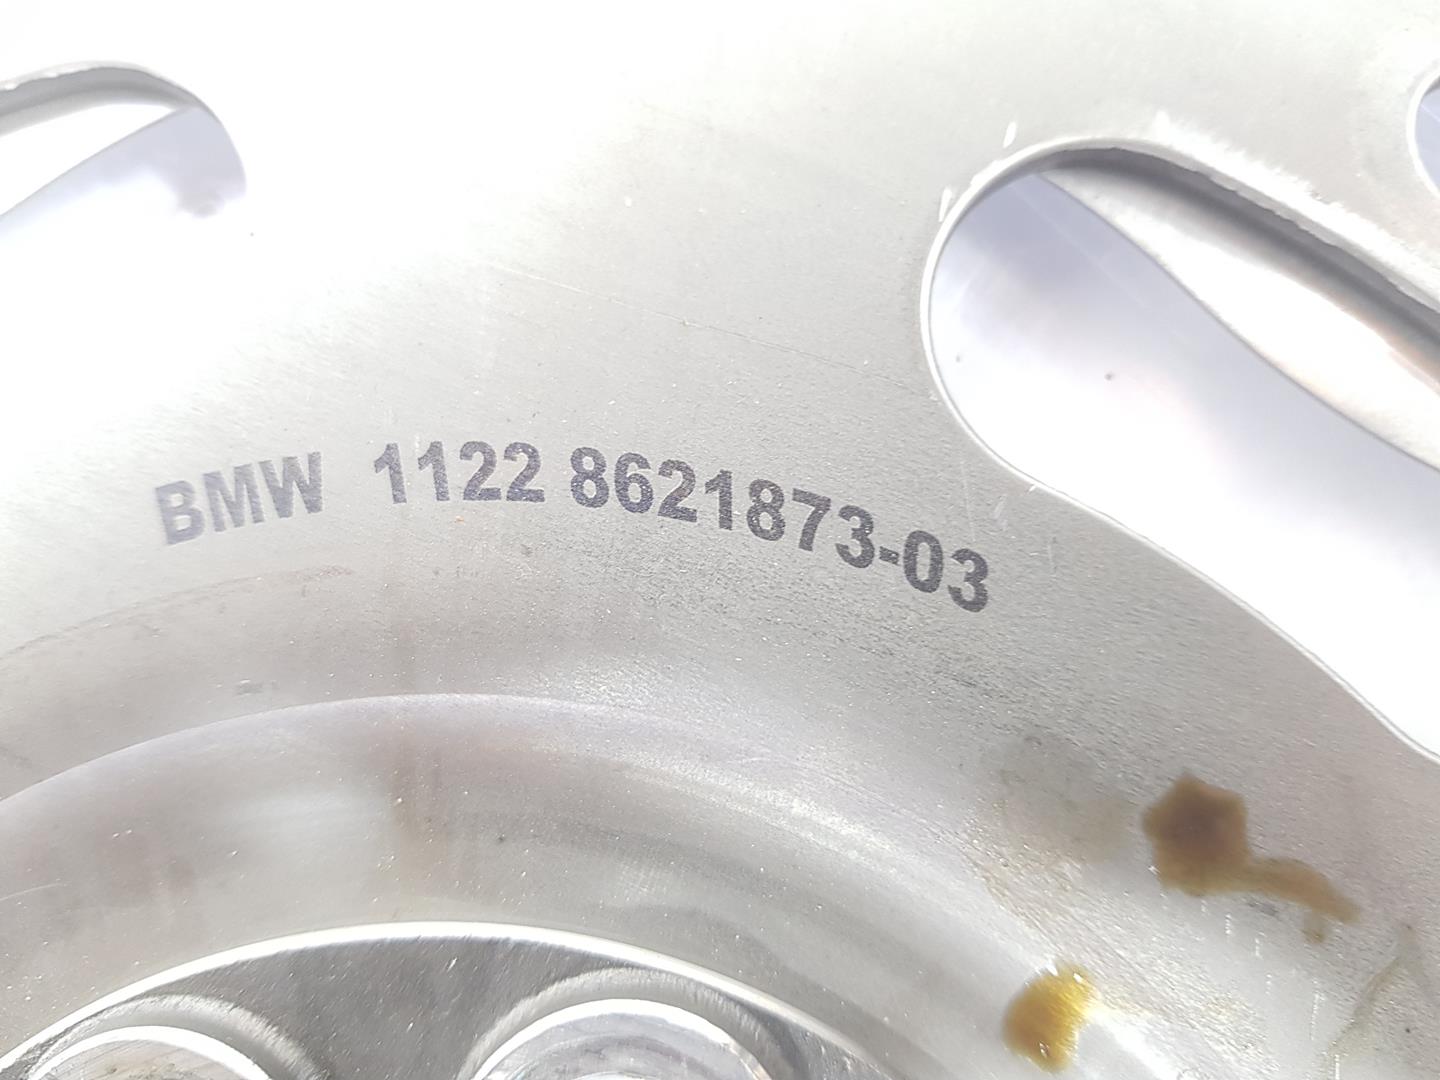 MINI Cooper R56 (2006-2015) Маховик 11228621873, 8621873, 1212CD2222DL 19830168